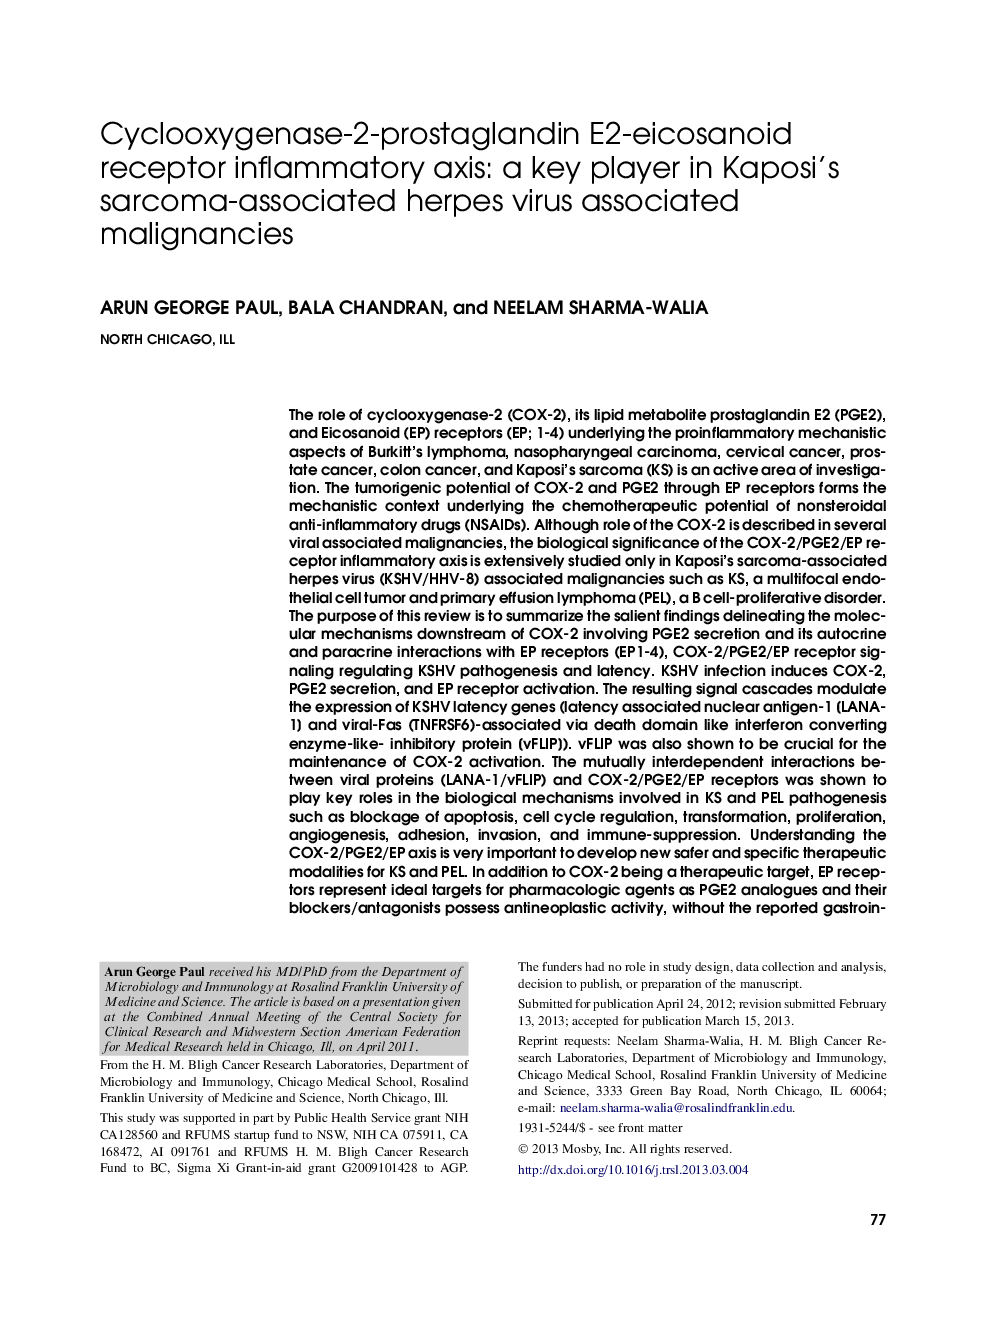 Cyclooxygenase-2-prostaglandin E2-eicosanoid receptor inflammatory axis: a key player in Kaposi's sarcoma-associated herpes virus associated malignancies 